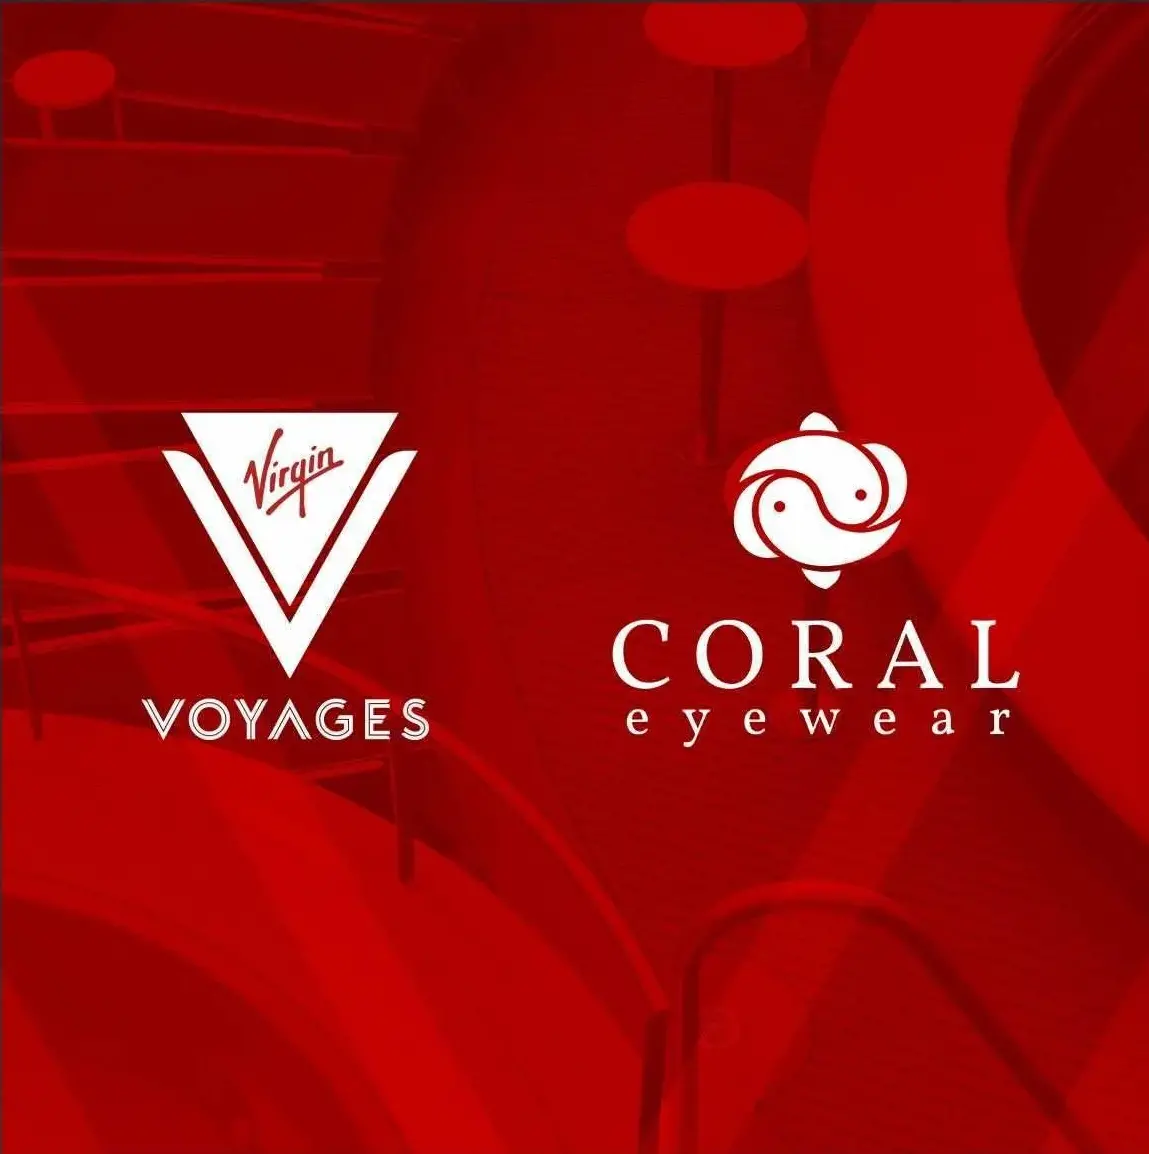 Virgin Voyages & Coral Eyewear